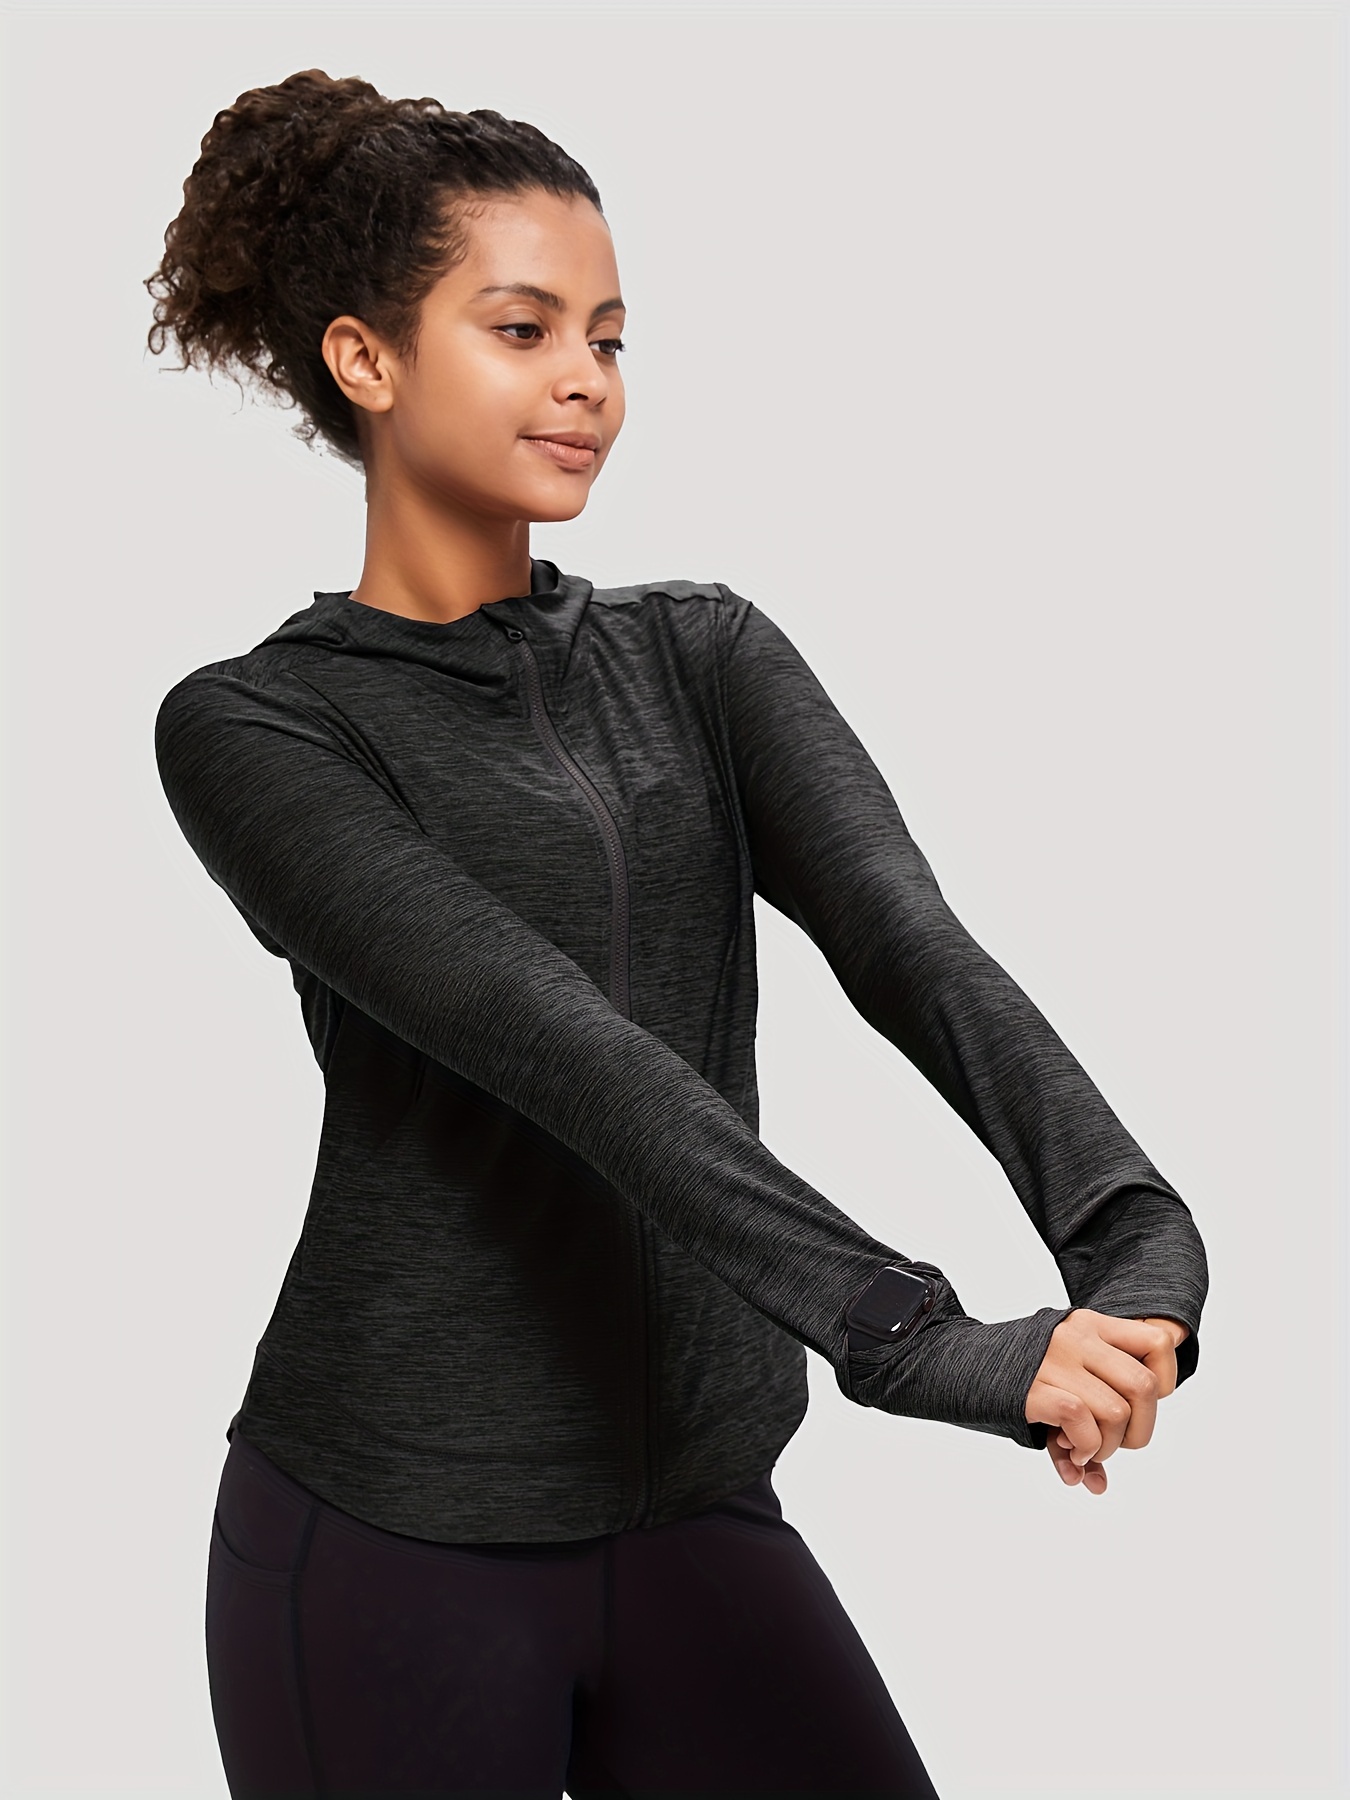 Yoga dress women yoga long sleeve sports sweater hooded waist